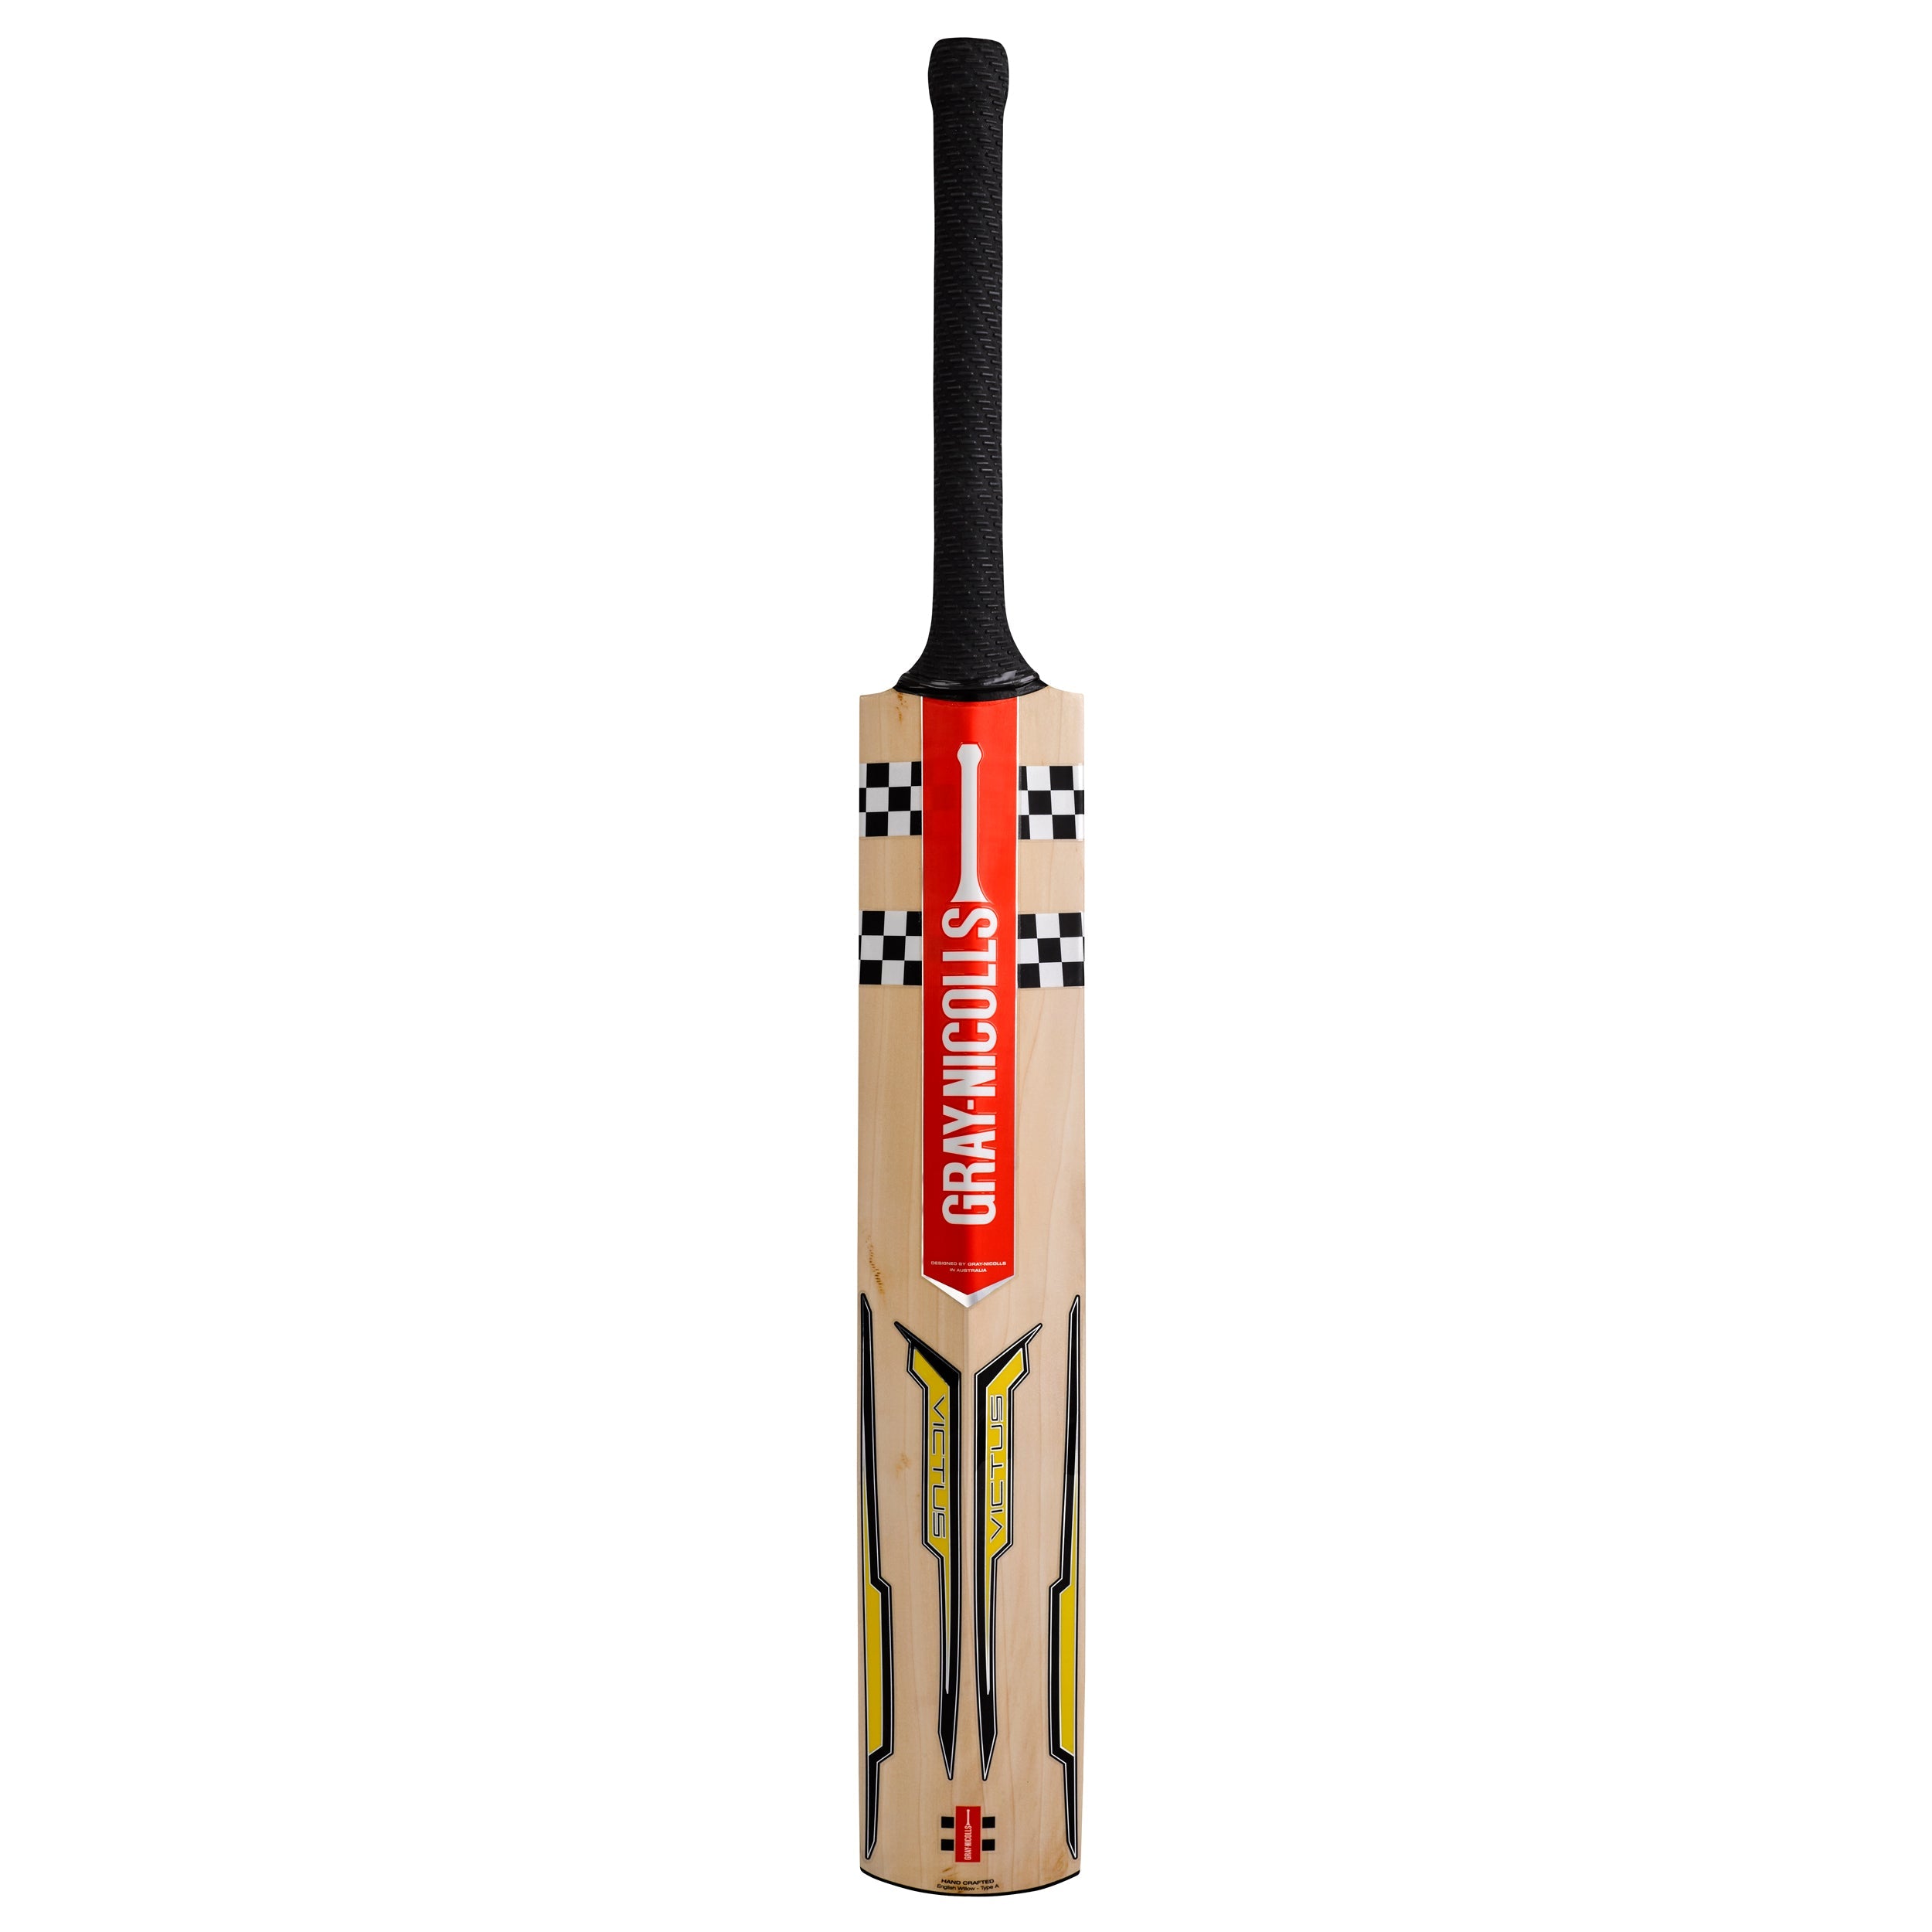 Gray - Nicolls Victus 750 PLAYNOW Senior Cricket Bat - The Cricket Warehouse